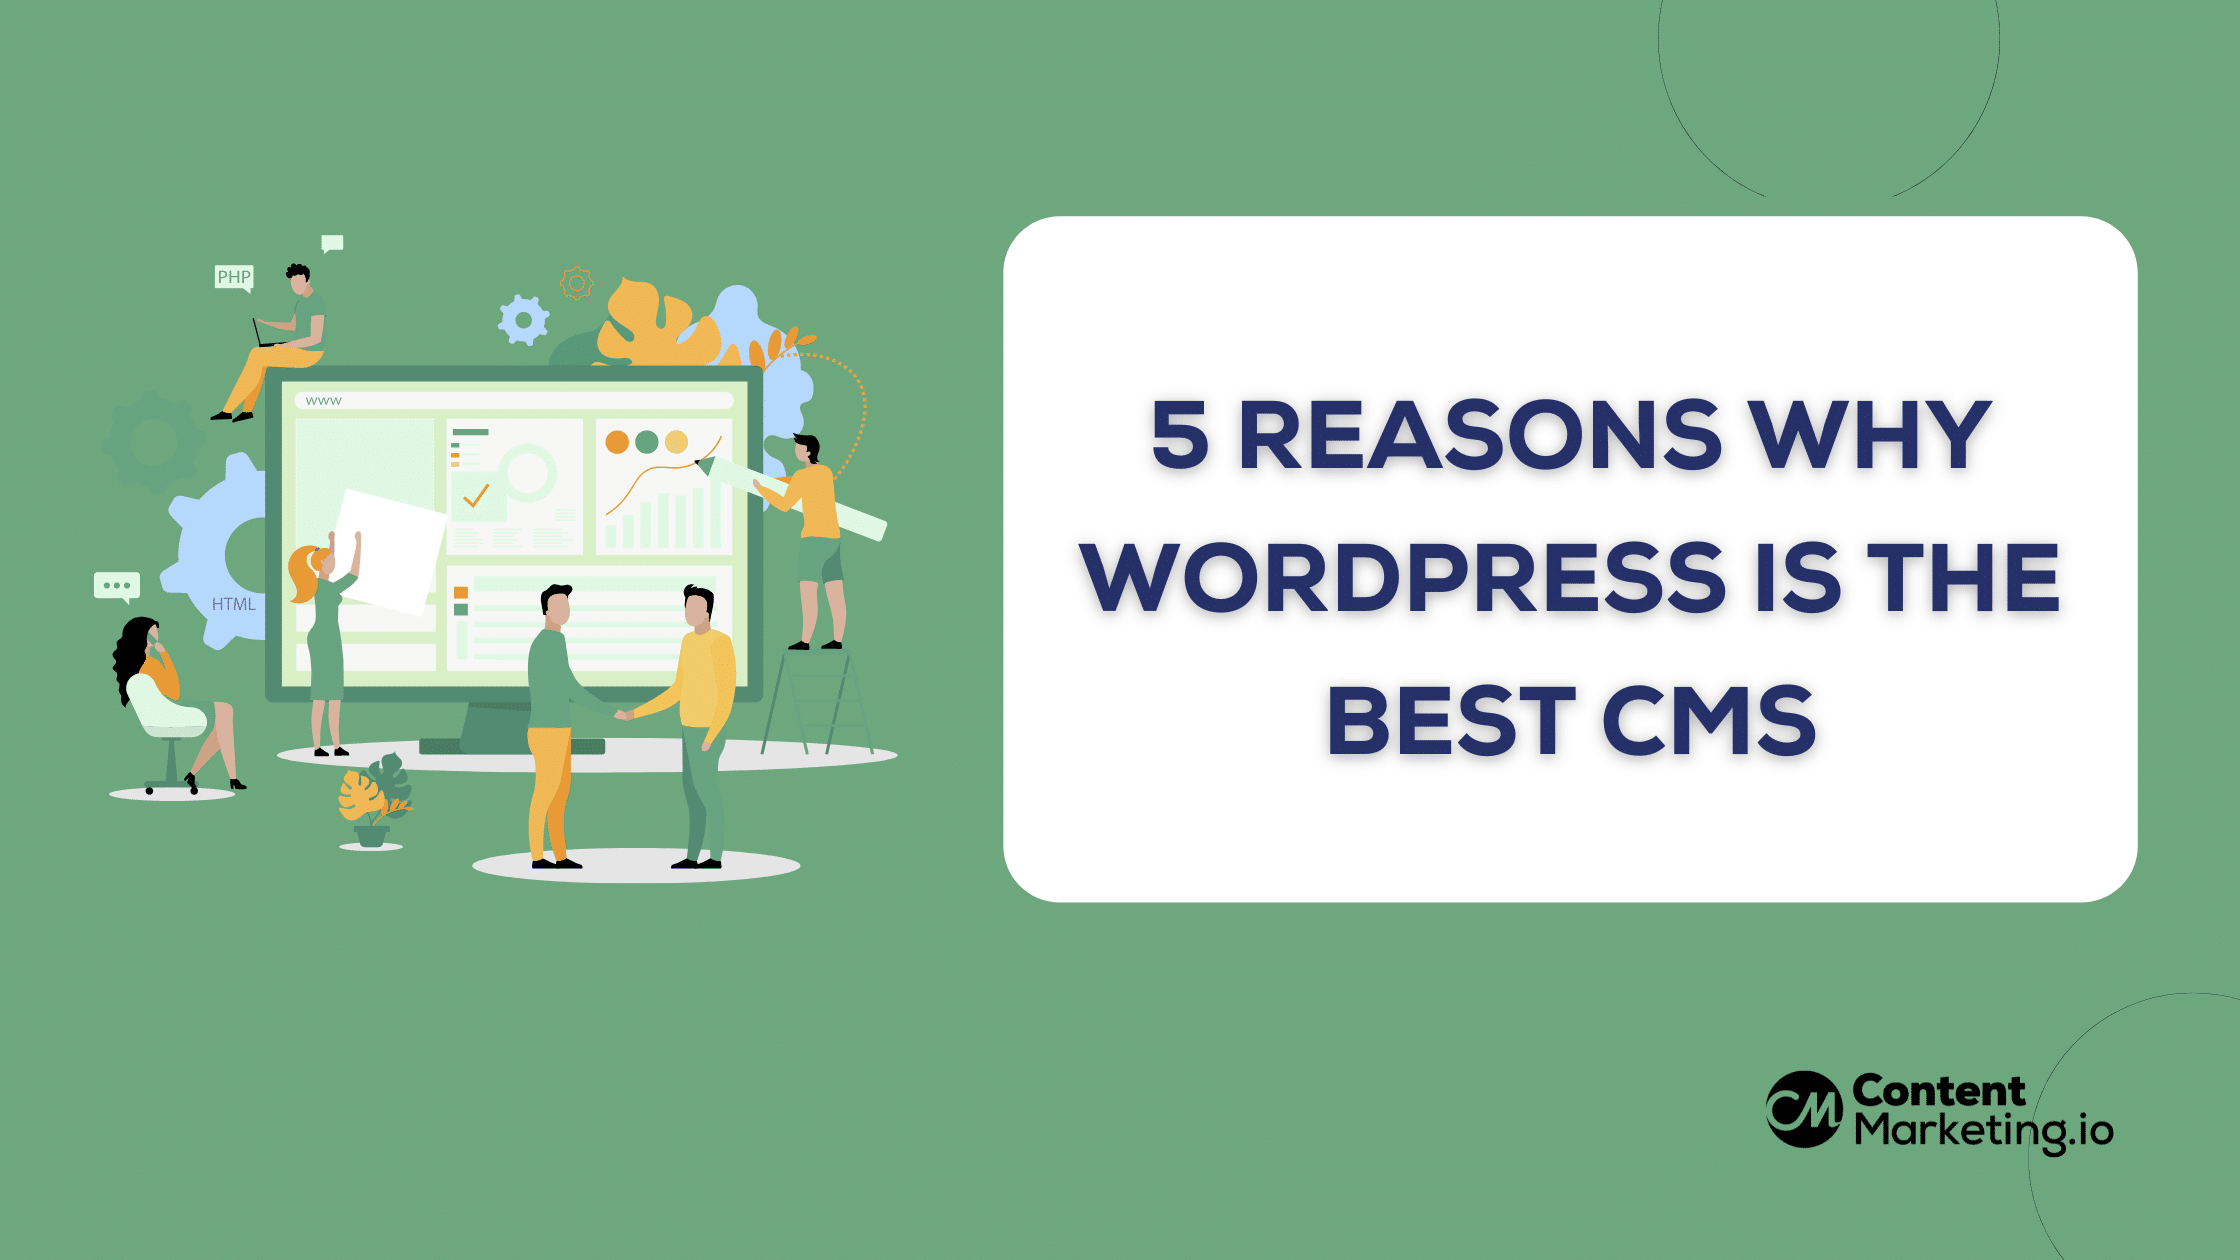 WordPress is the best CMS